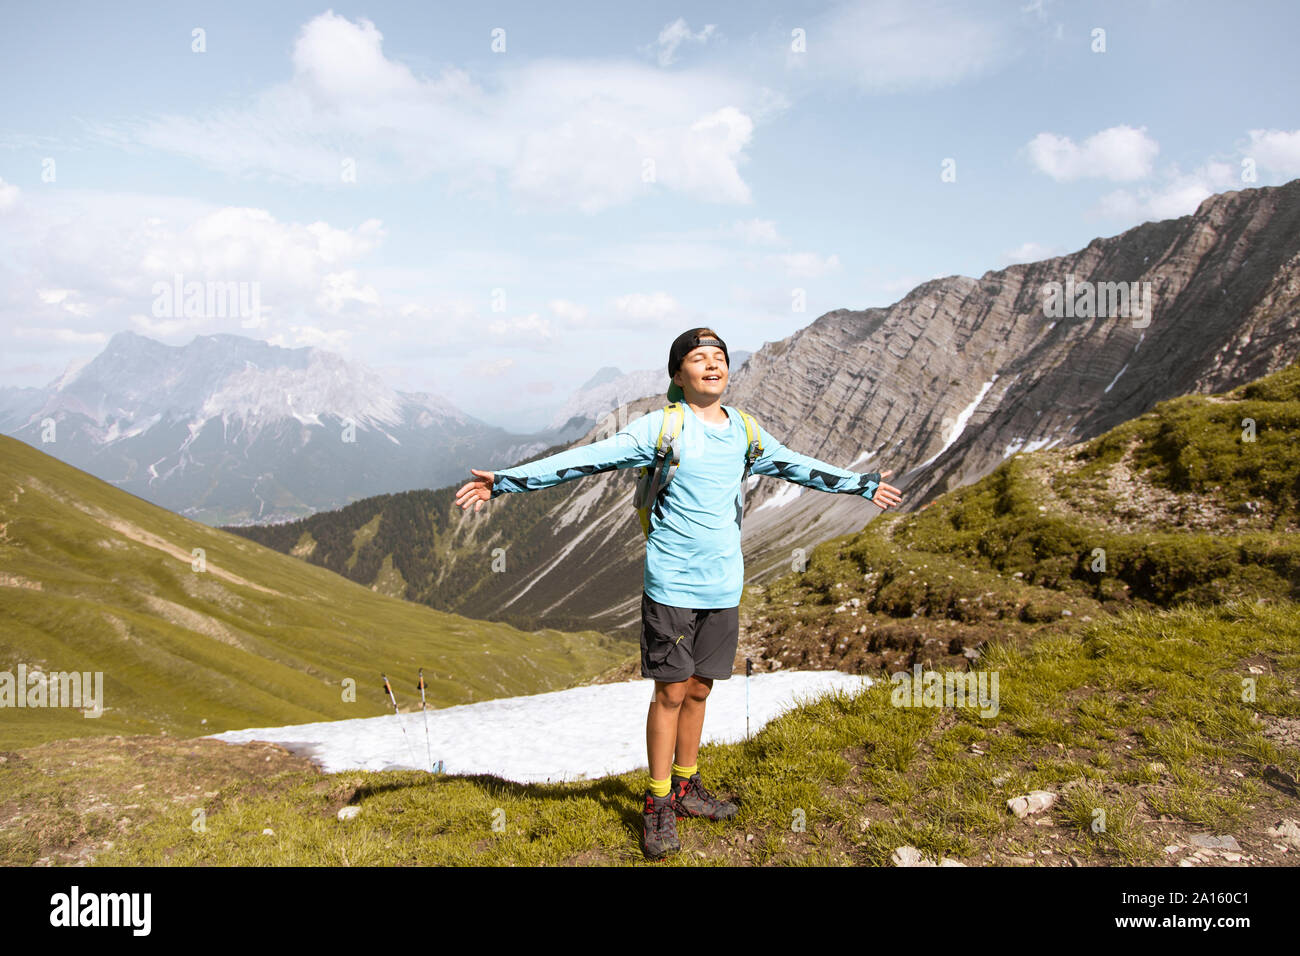 Boy hiking in the mountains enjoying nature Stock Photo